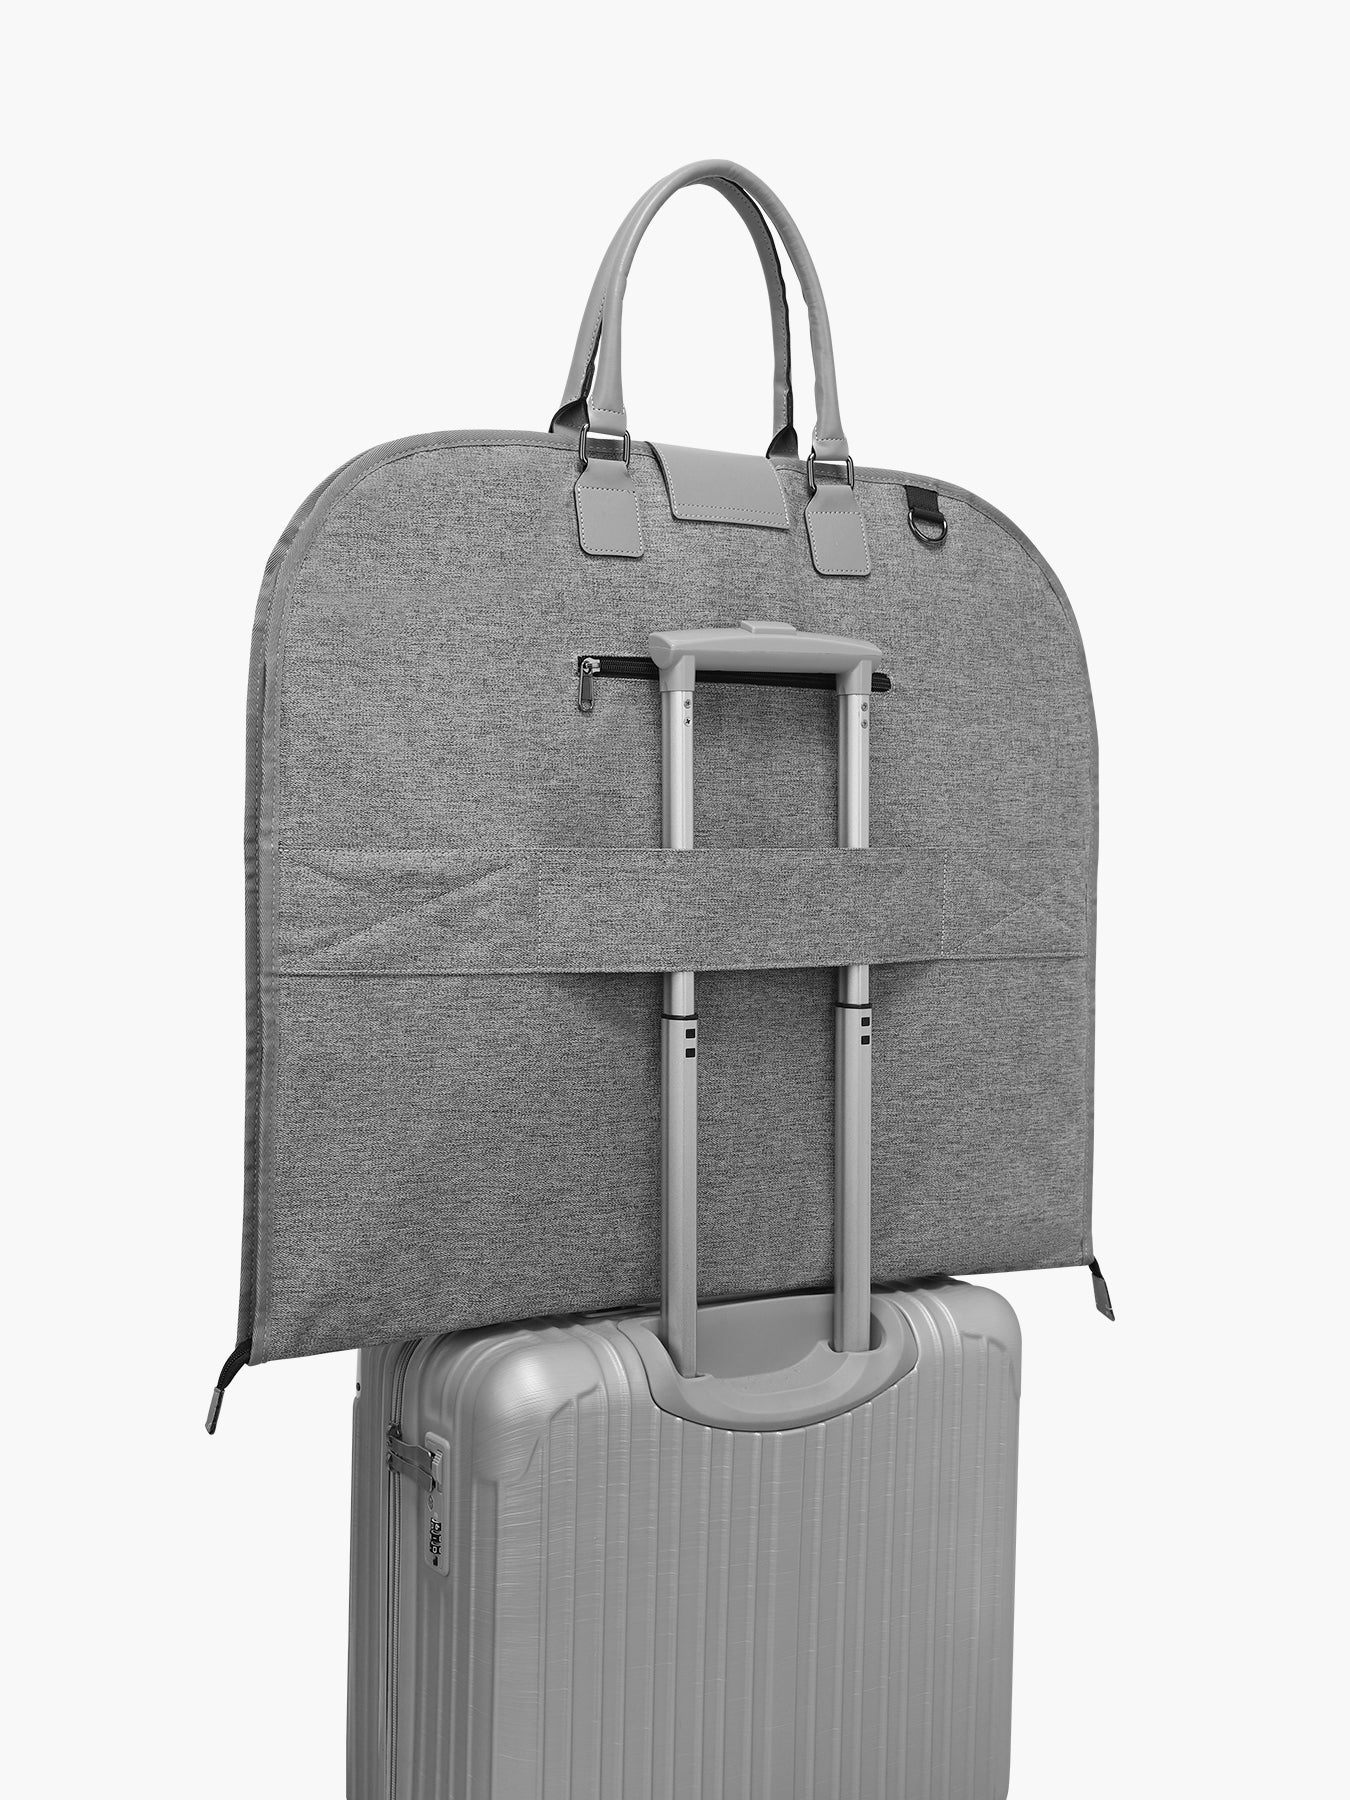 SLEEPING LAMB Heavy Duty Garment Bag for Travel, 43Waterproof Suit Bag for